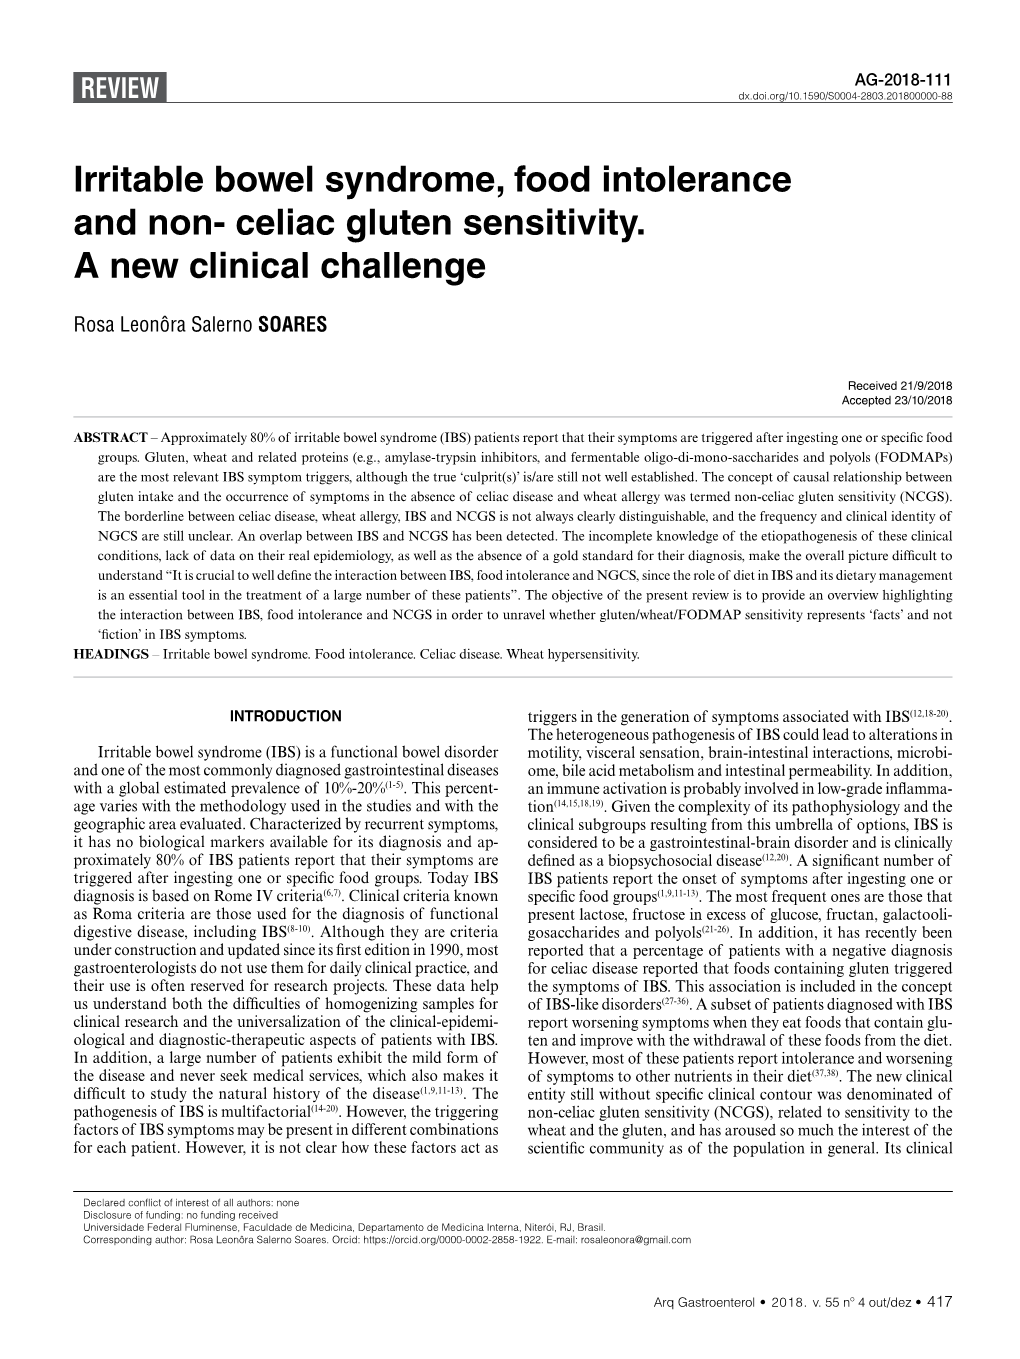 Irritable Bowel Syndrome, Food Intolerance and Non- Celiac Gluten Sensitivity